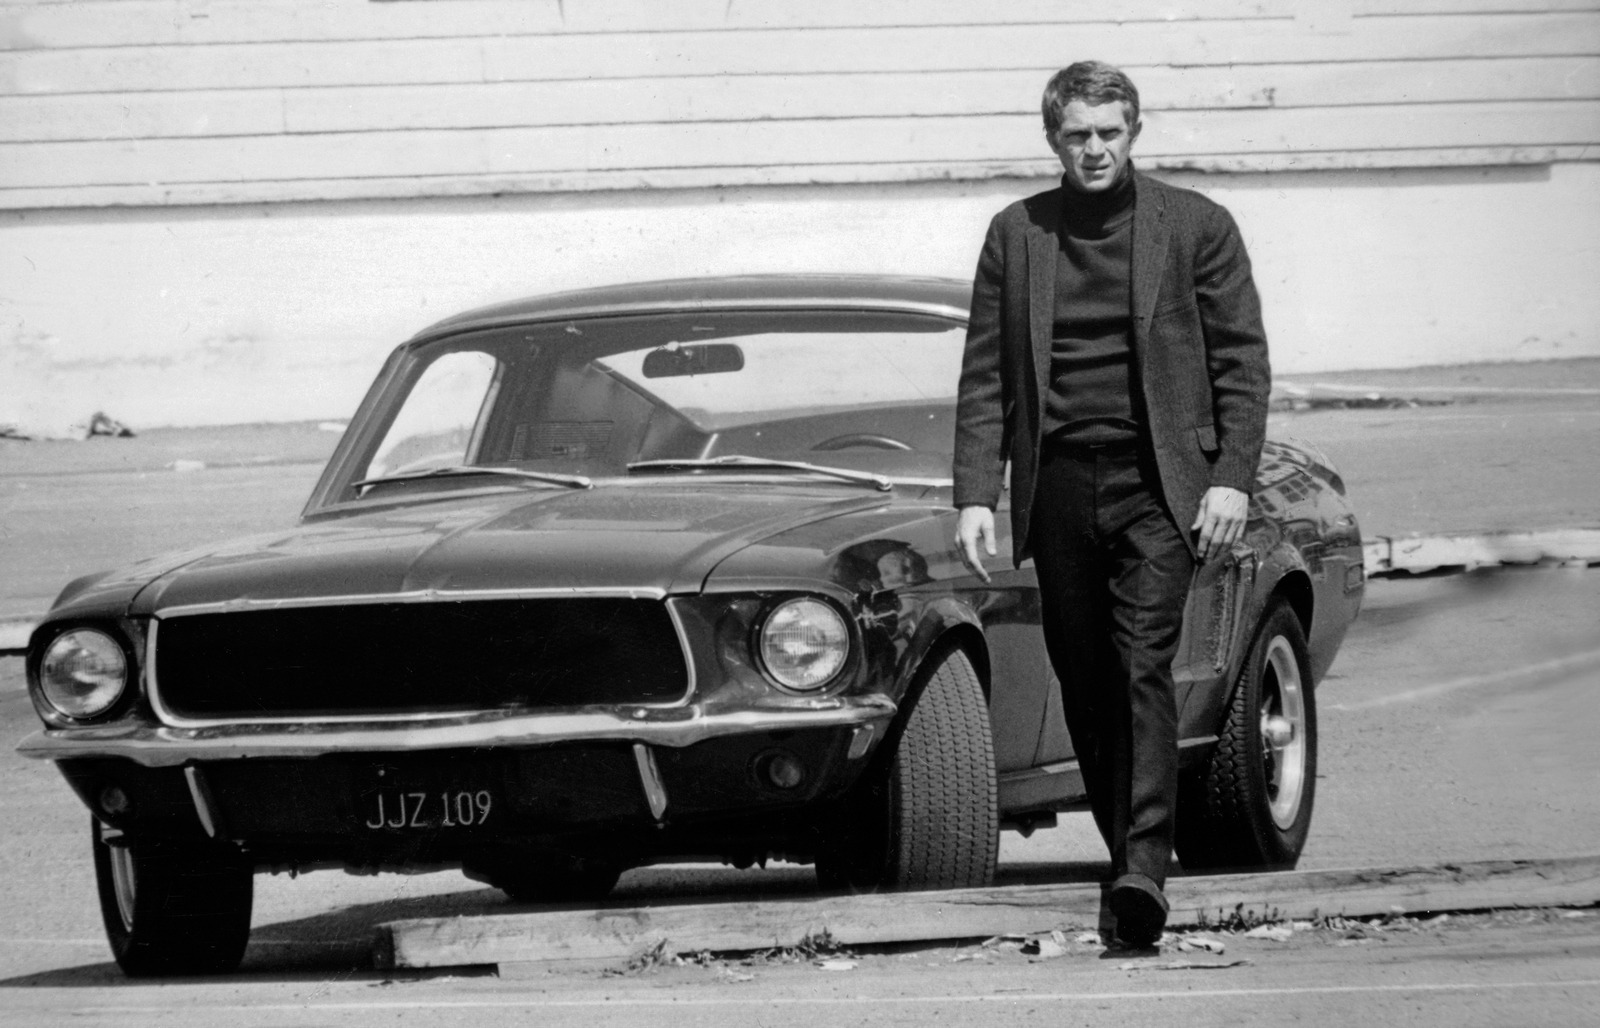 Steve-McQueen-Lost-Bullitt-Mustang-Car-2.jpg